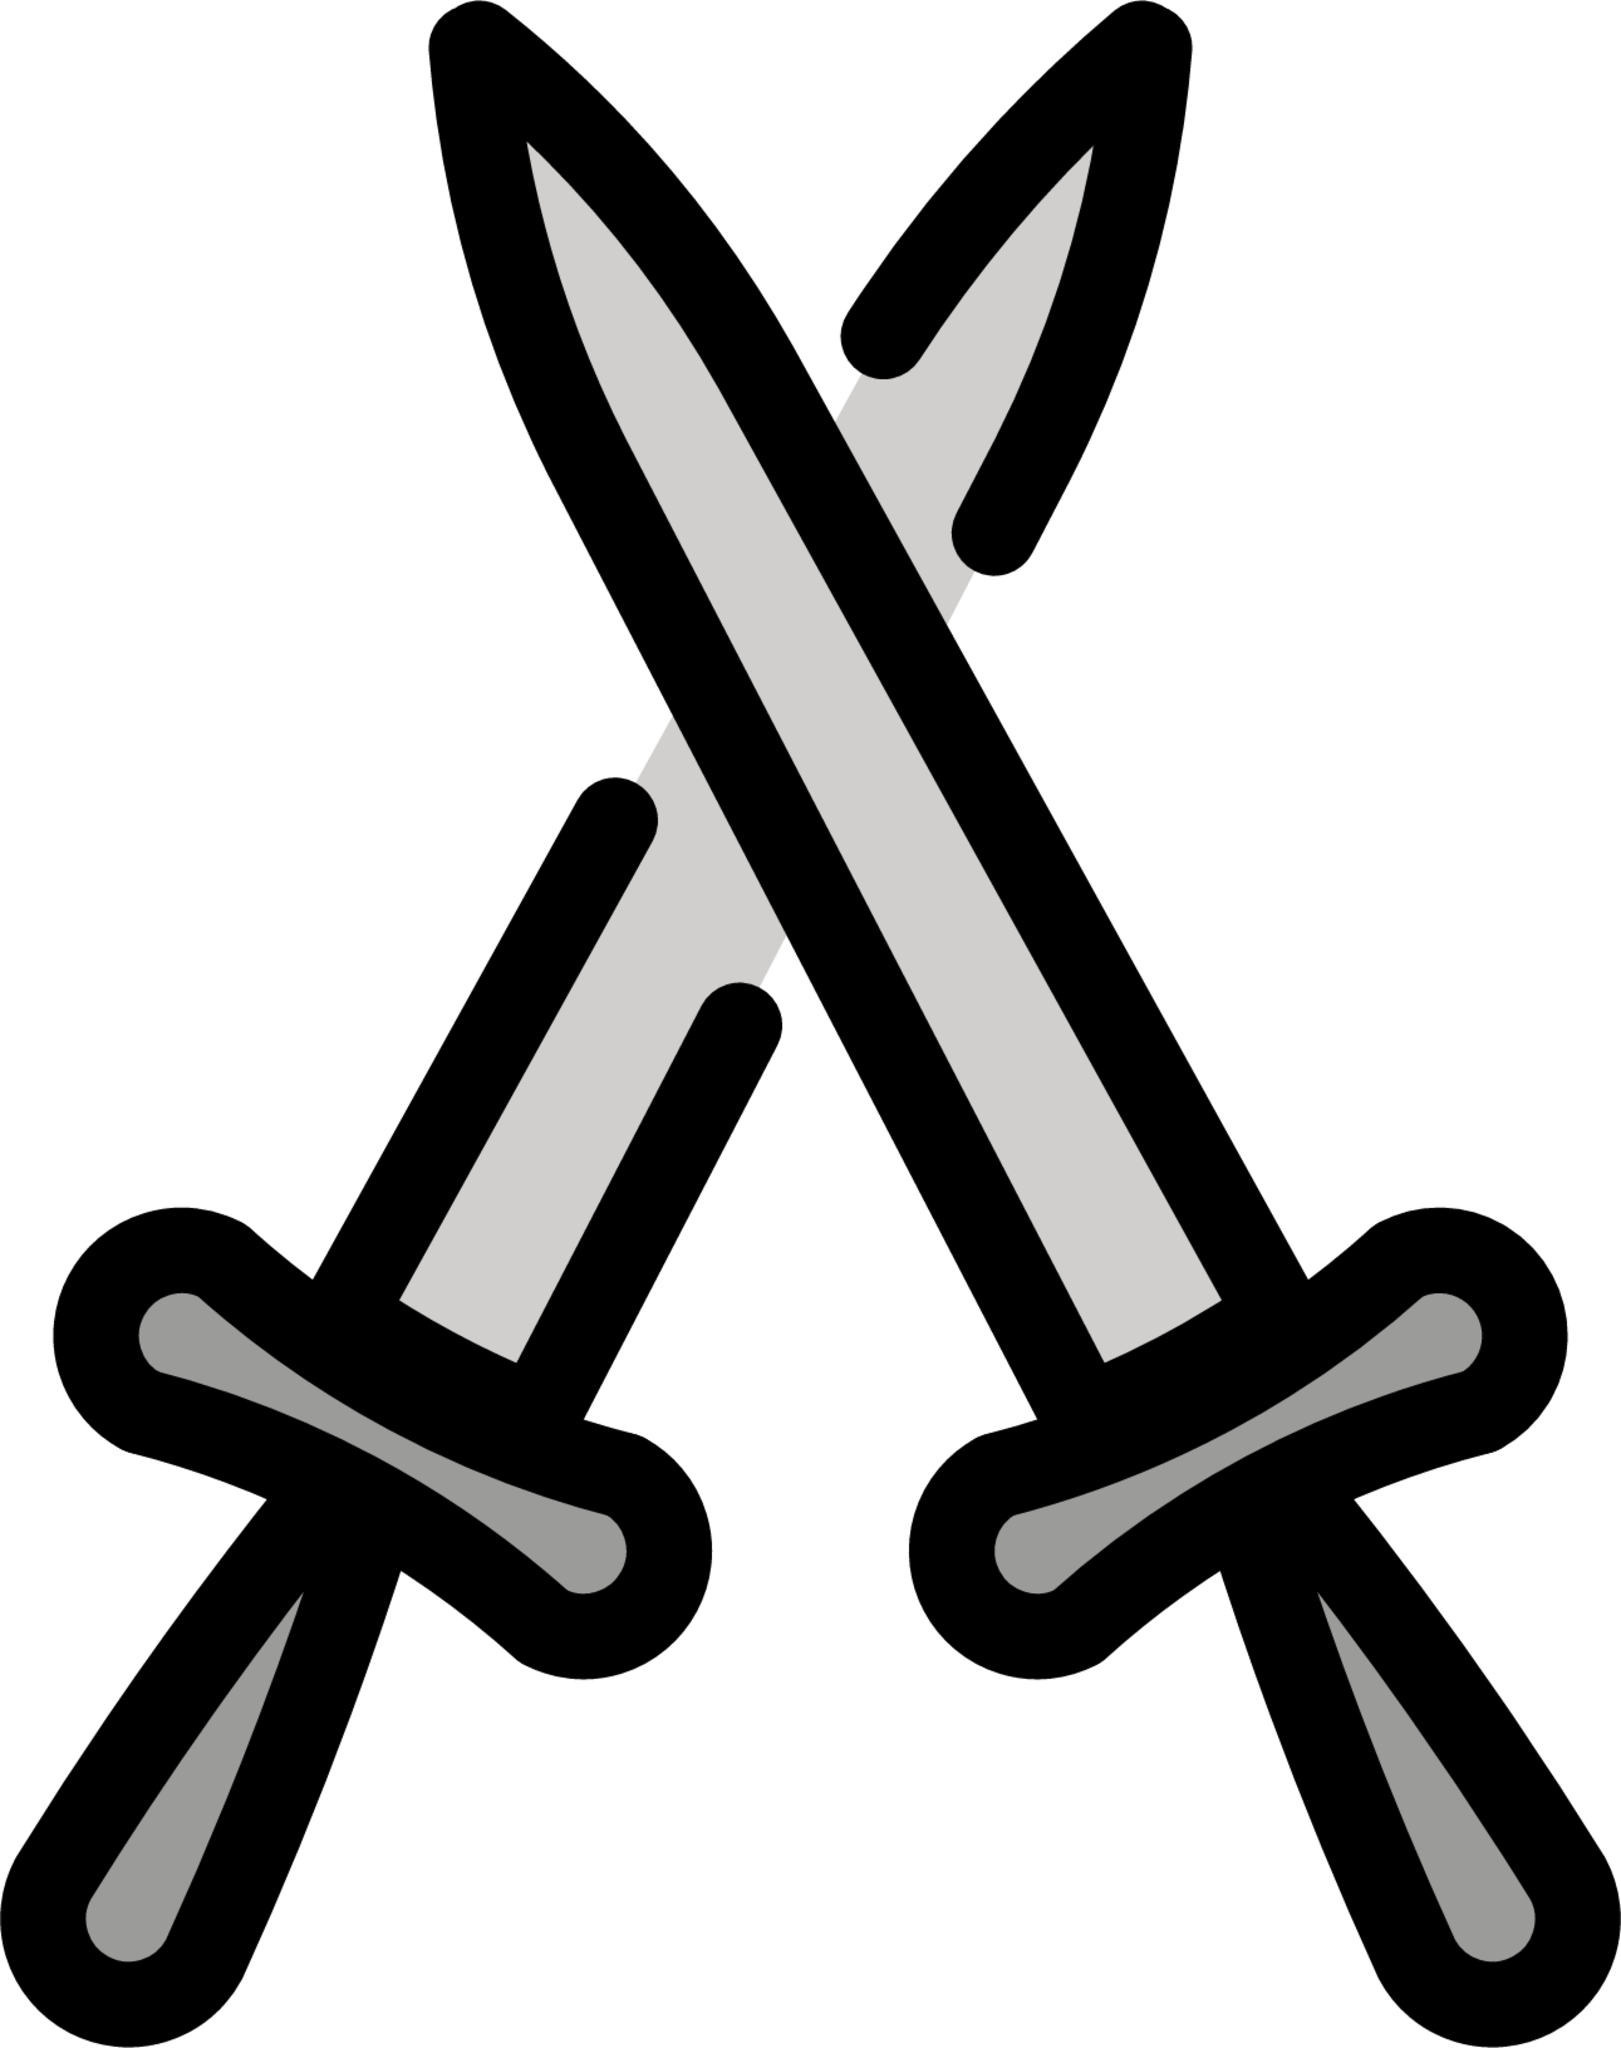 Crossed Swords Vector Isolated Icon Emoji Illustration Crossed Swords  Vector Emoticon Stock Illustration - Download Image Now - iStock